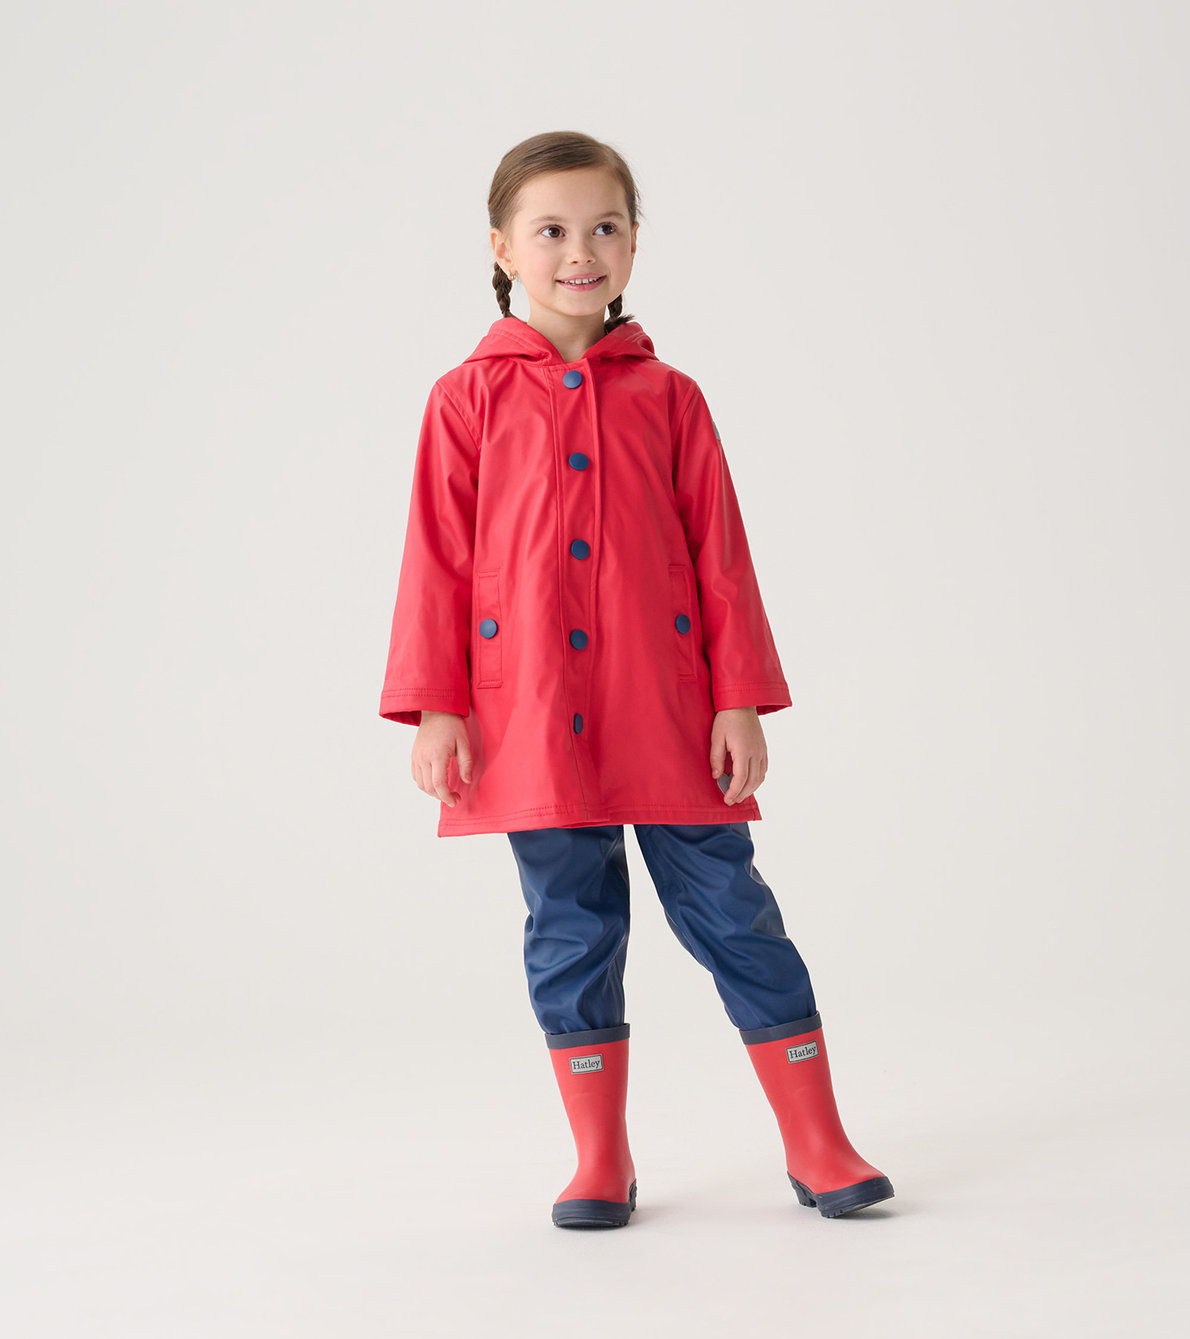 View larger image of Red & Navy Kids Rain Jacket